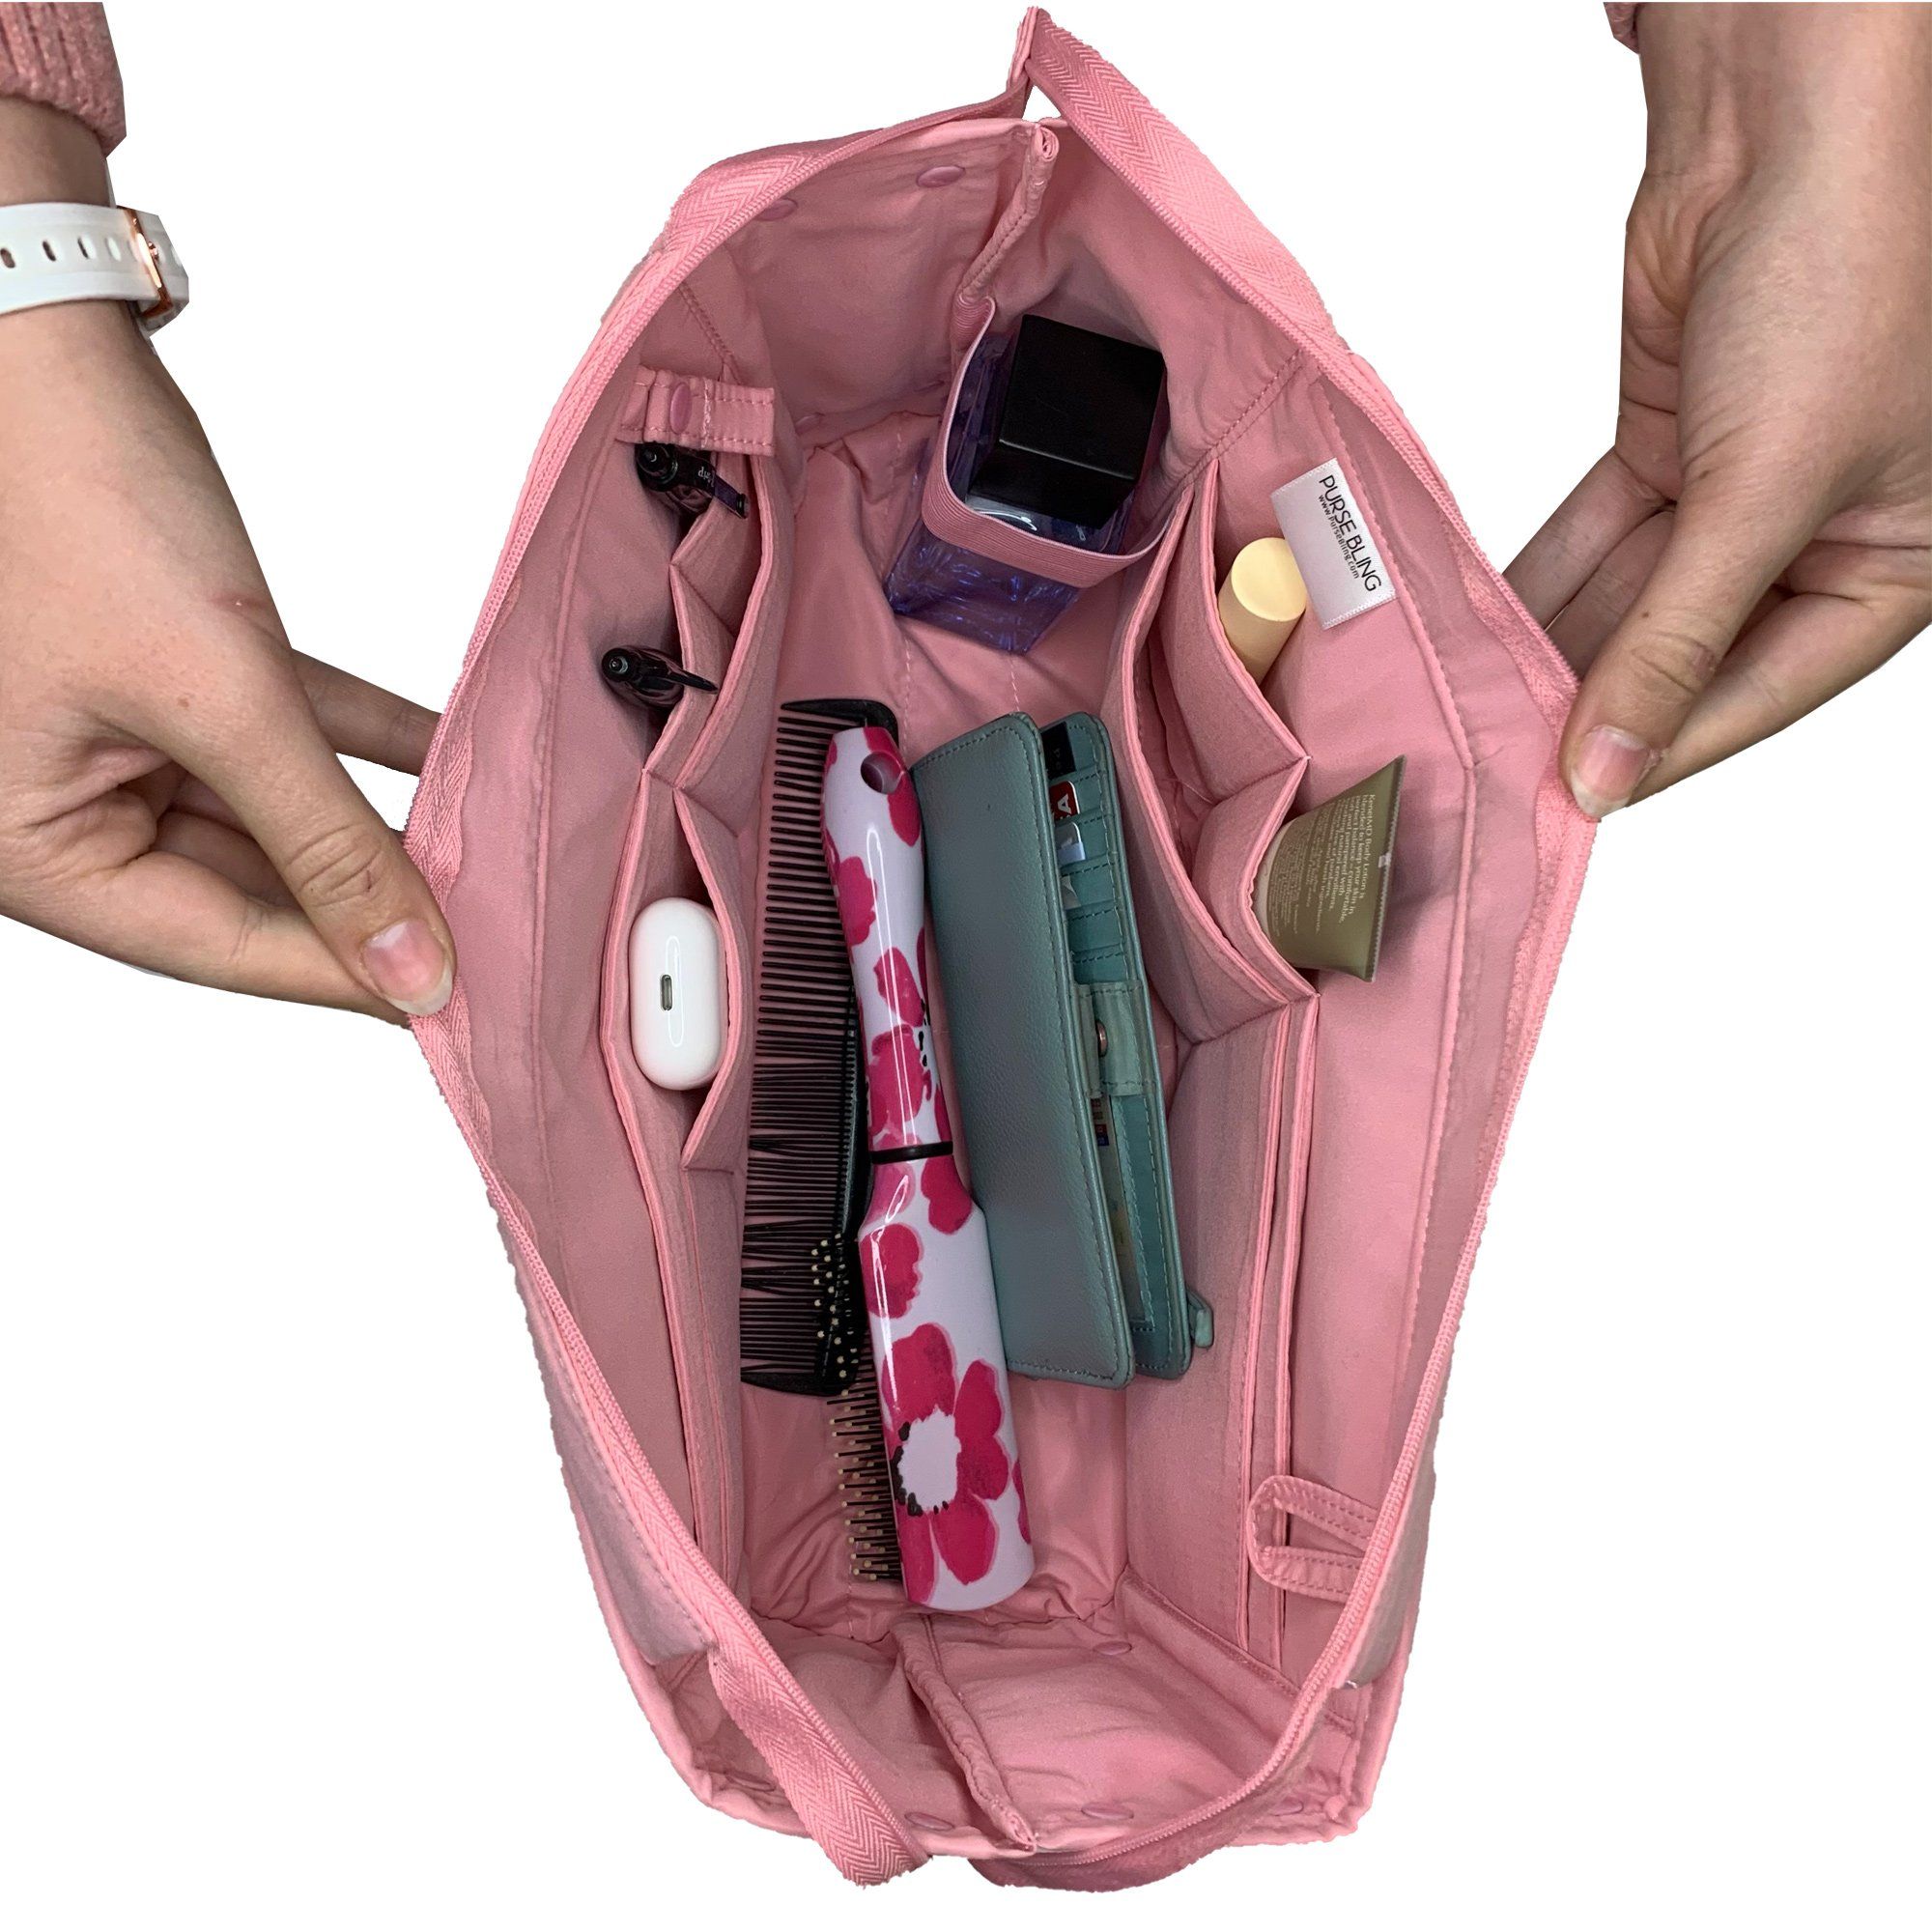 purse organizer for